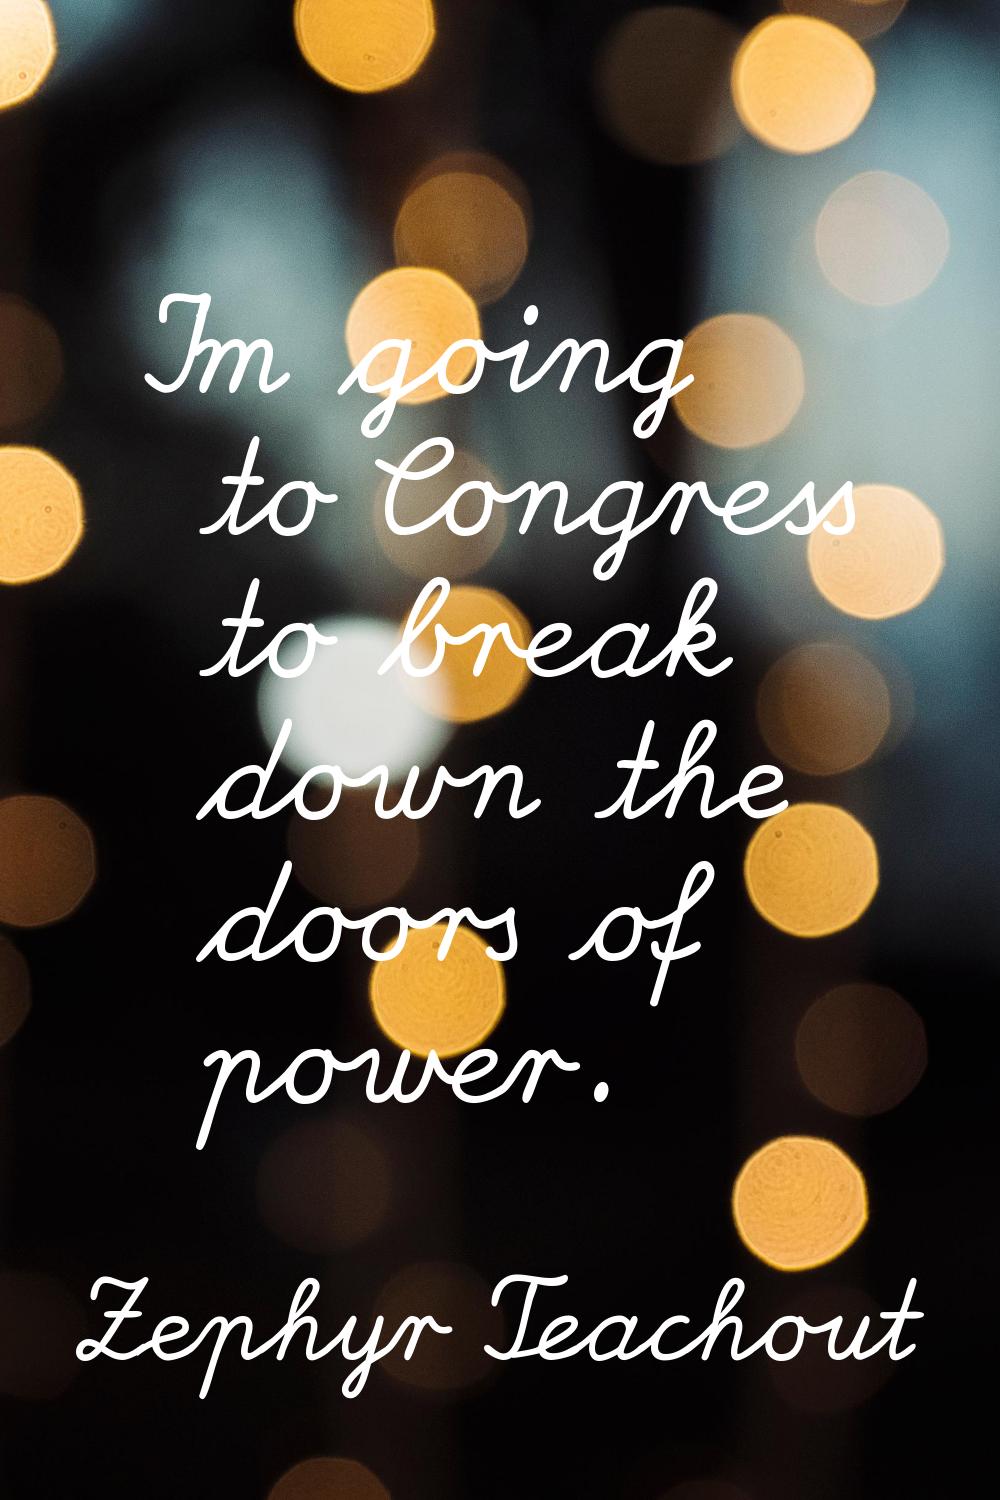 I’m going to Congress to break down the doors of power.